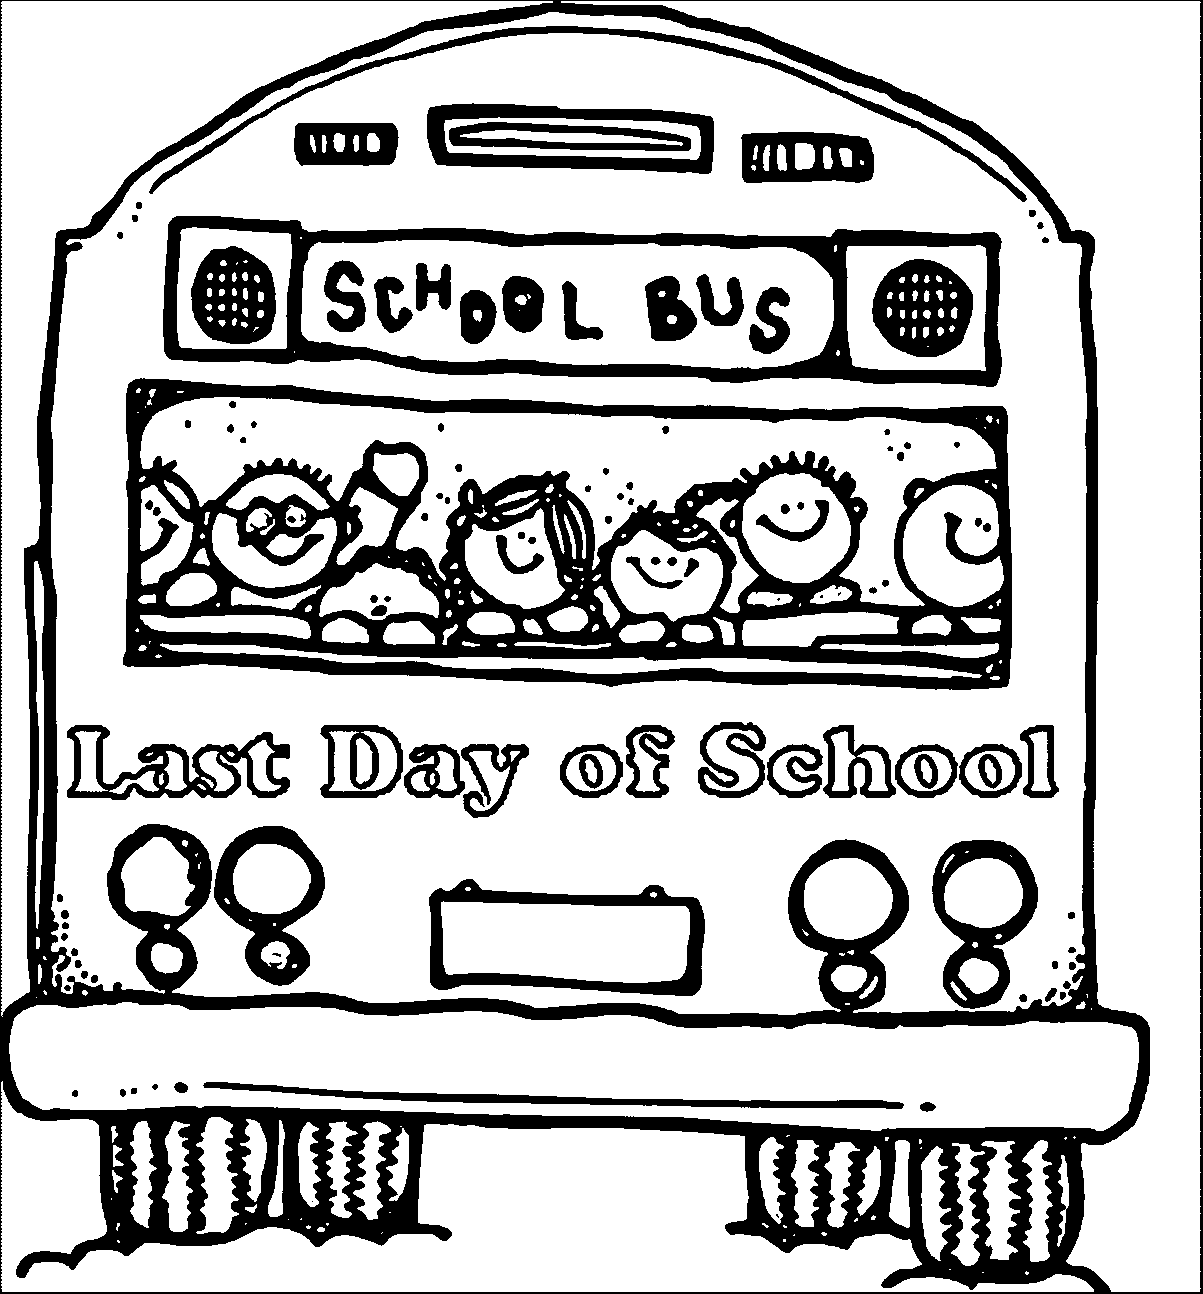 last-day-of-school-printable-signs-2017-2018